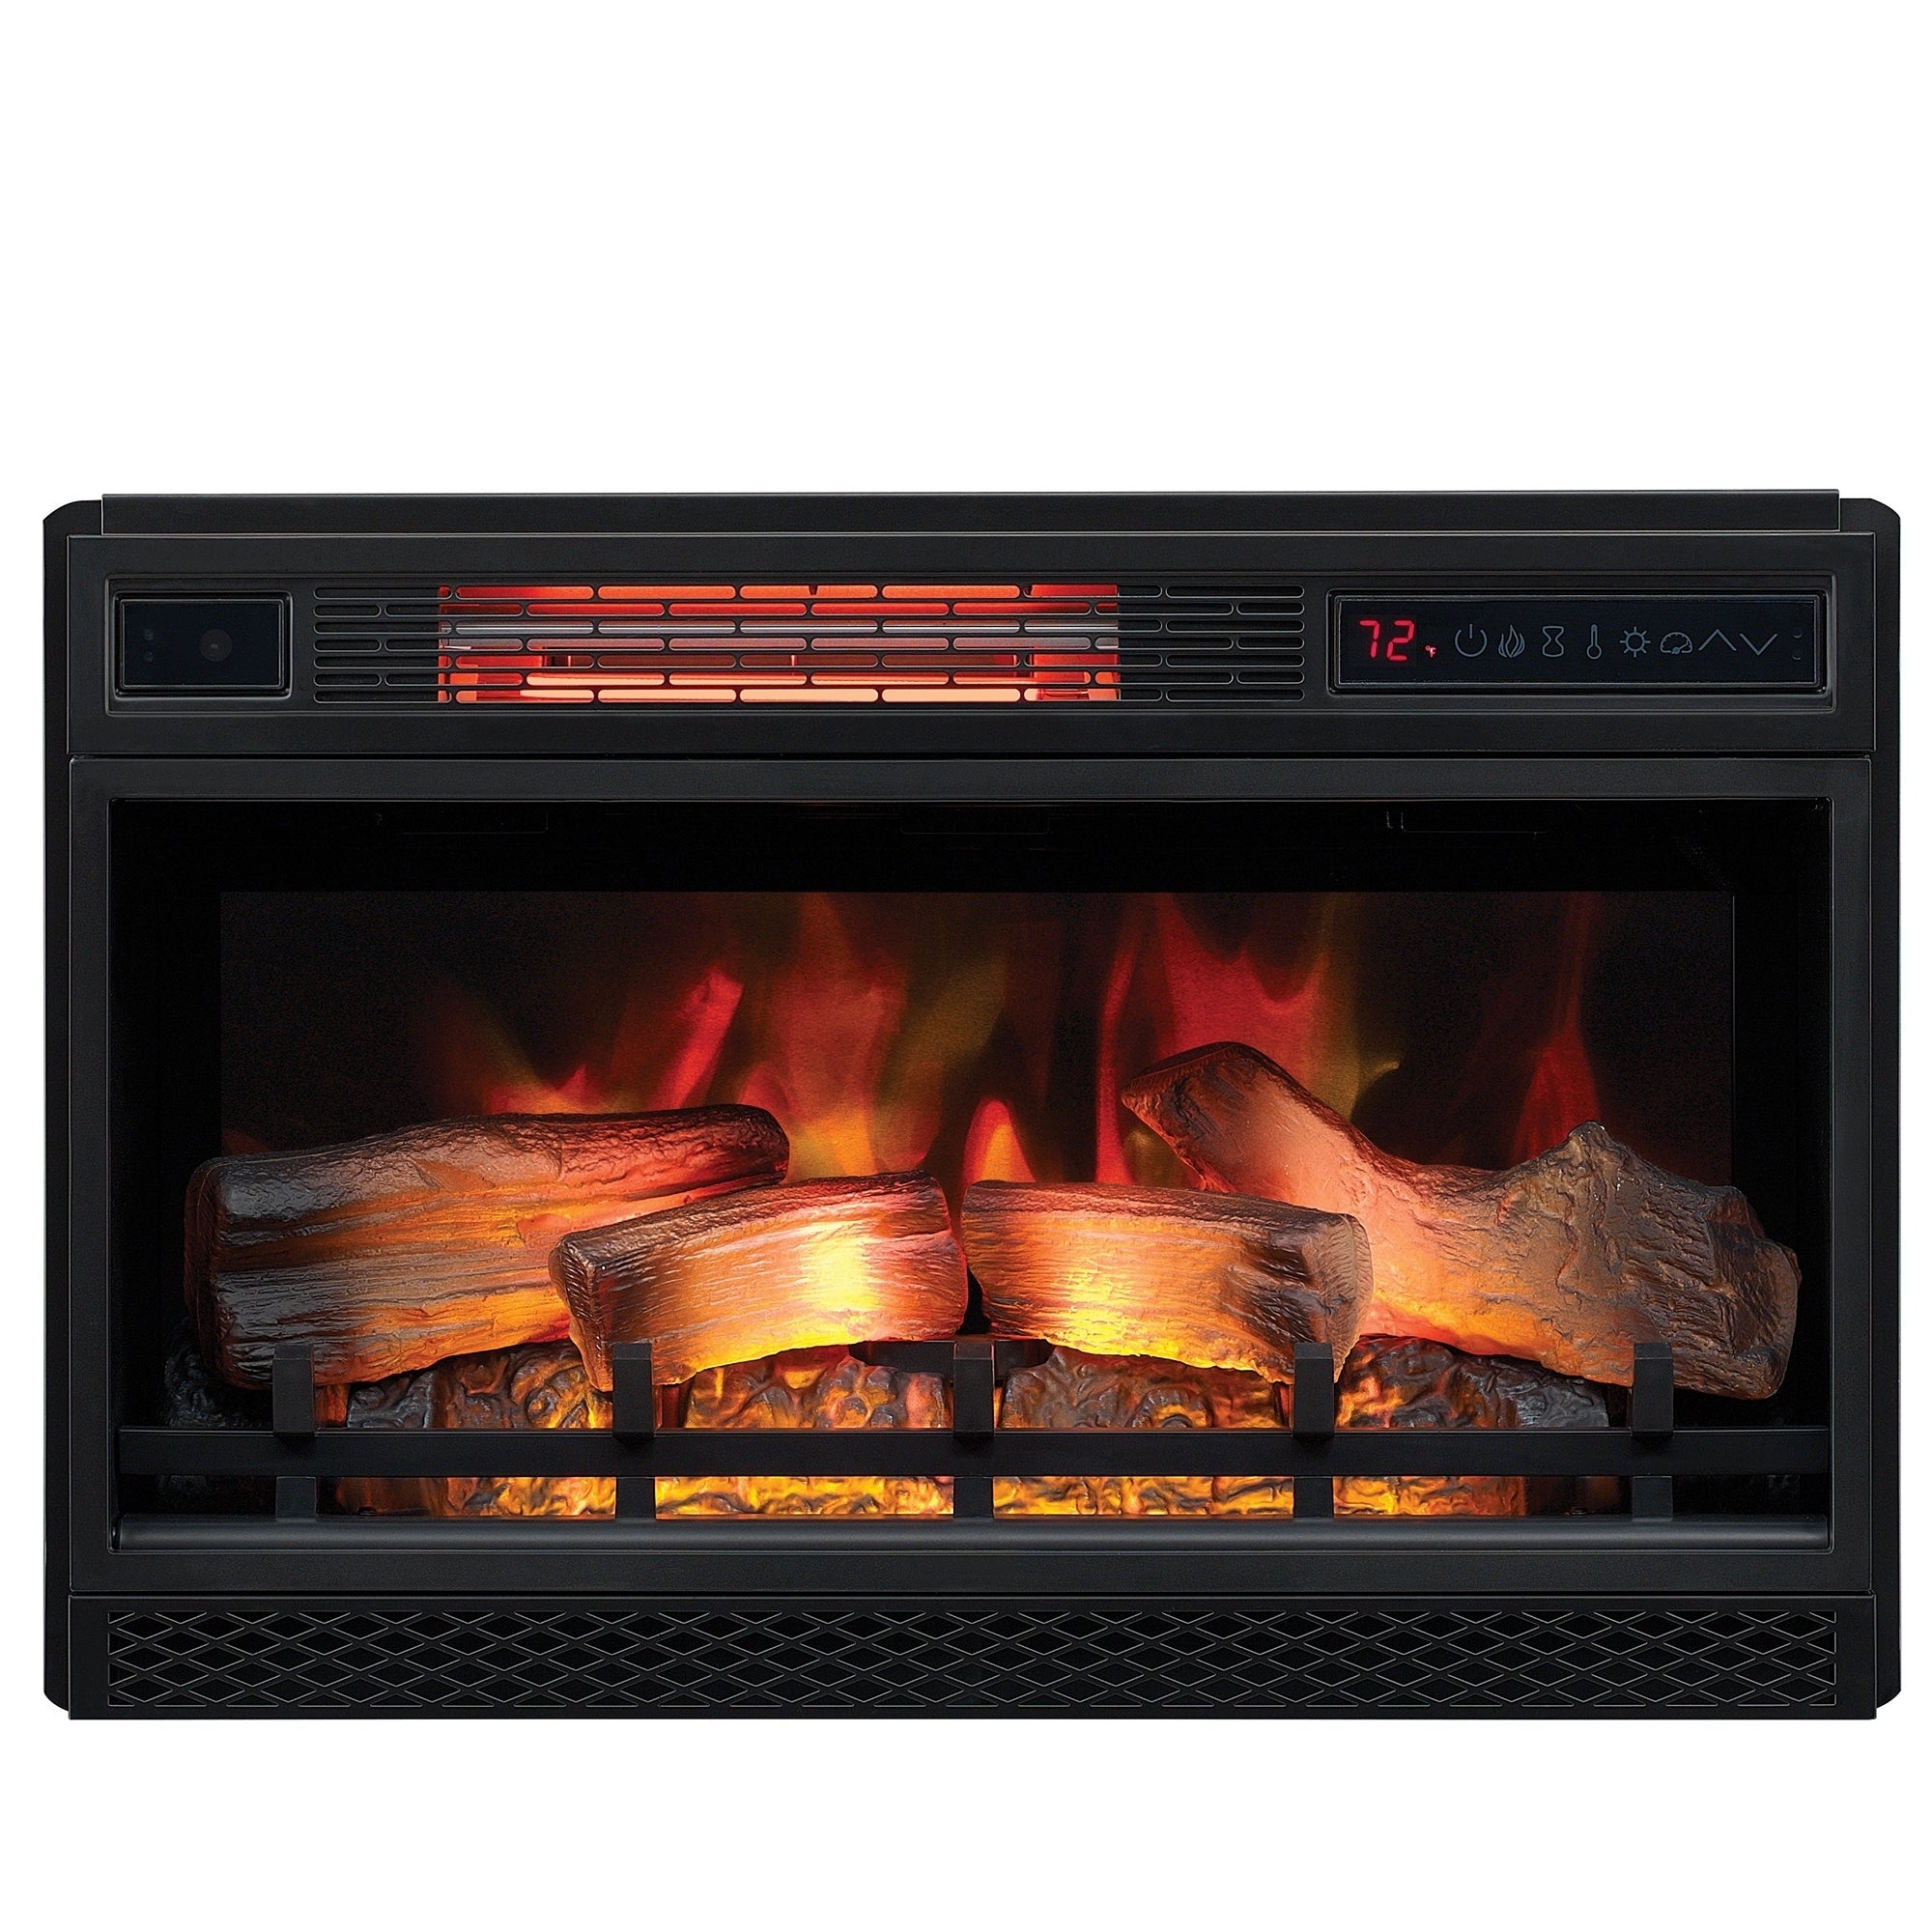 ClassicFlame 26 3D Infrared Quartz Electric Fireplace Insert 8528b73f 0afe 431a bfd7 22f5d3fc702d